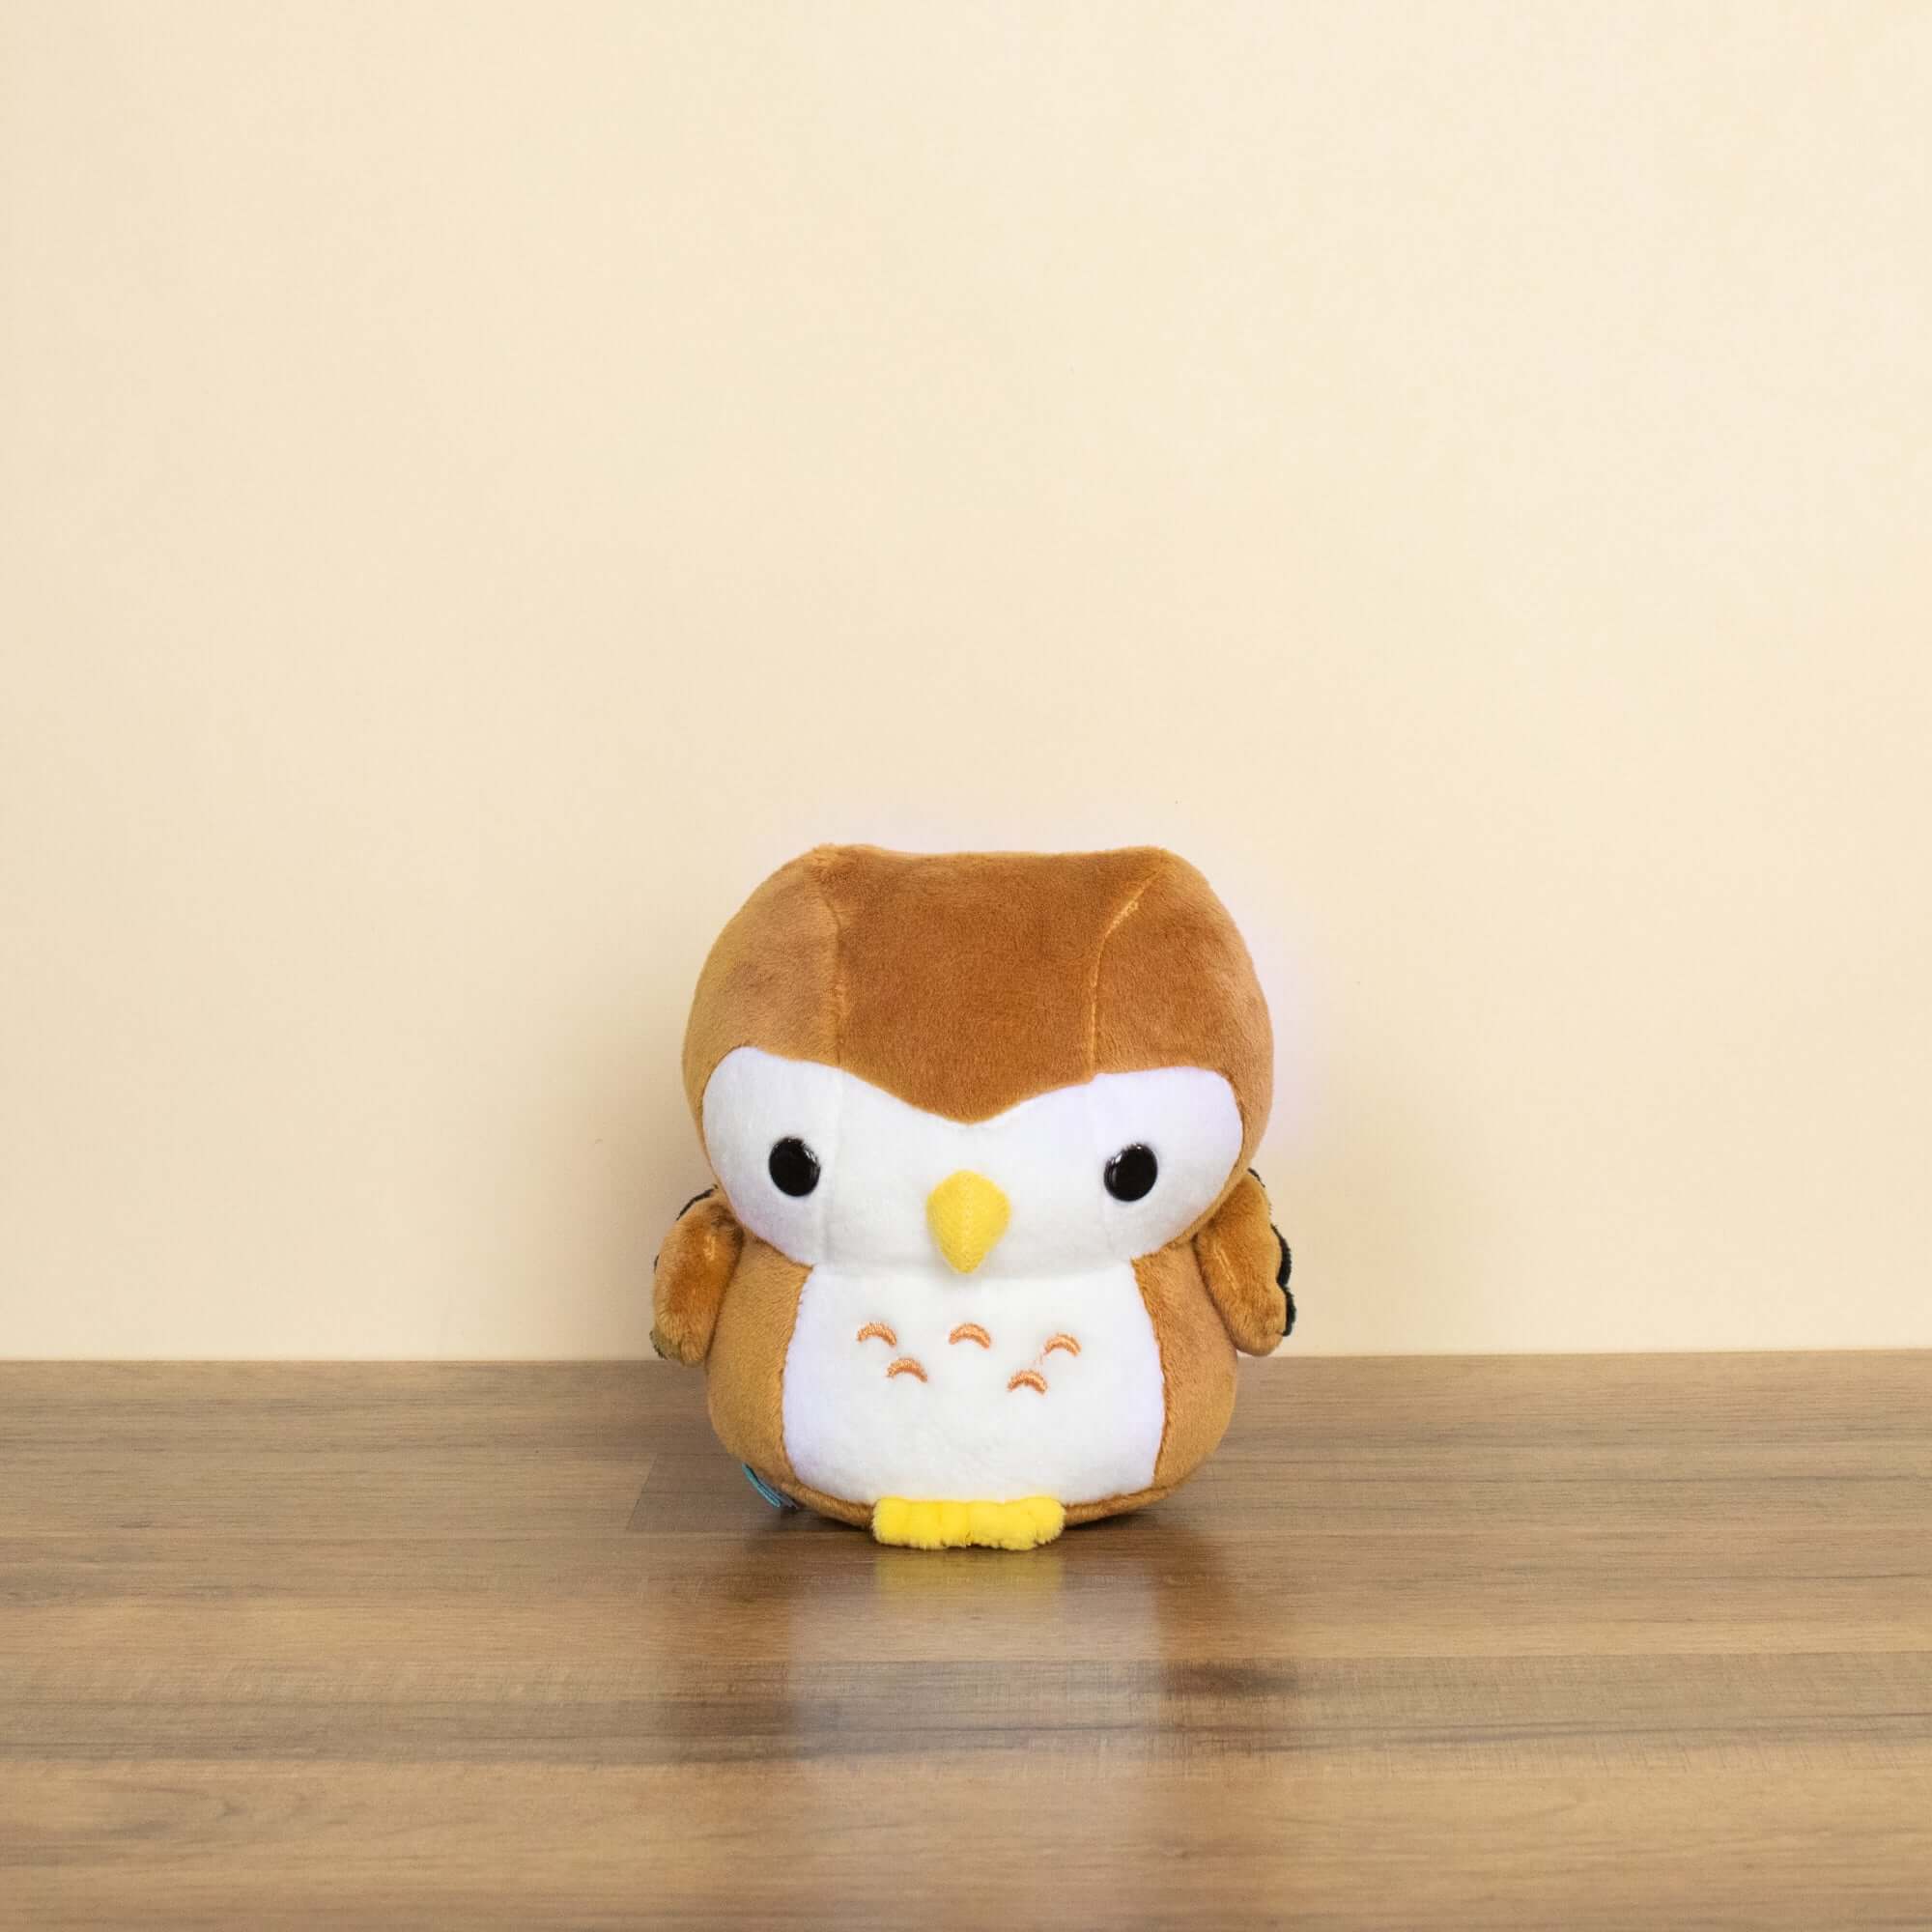 Owl Design Mini Bag Charm Keychain